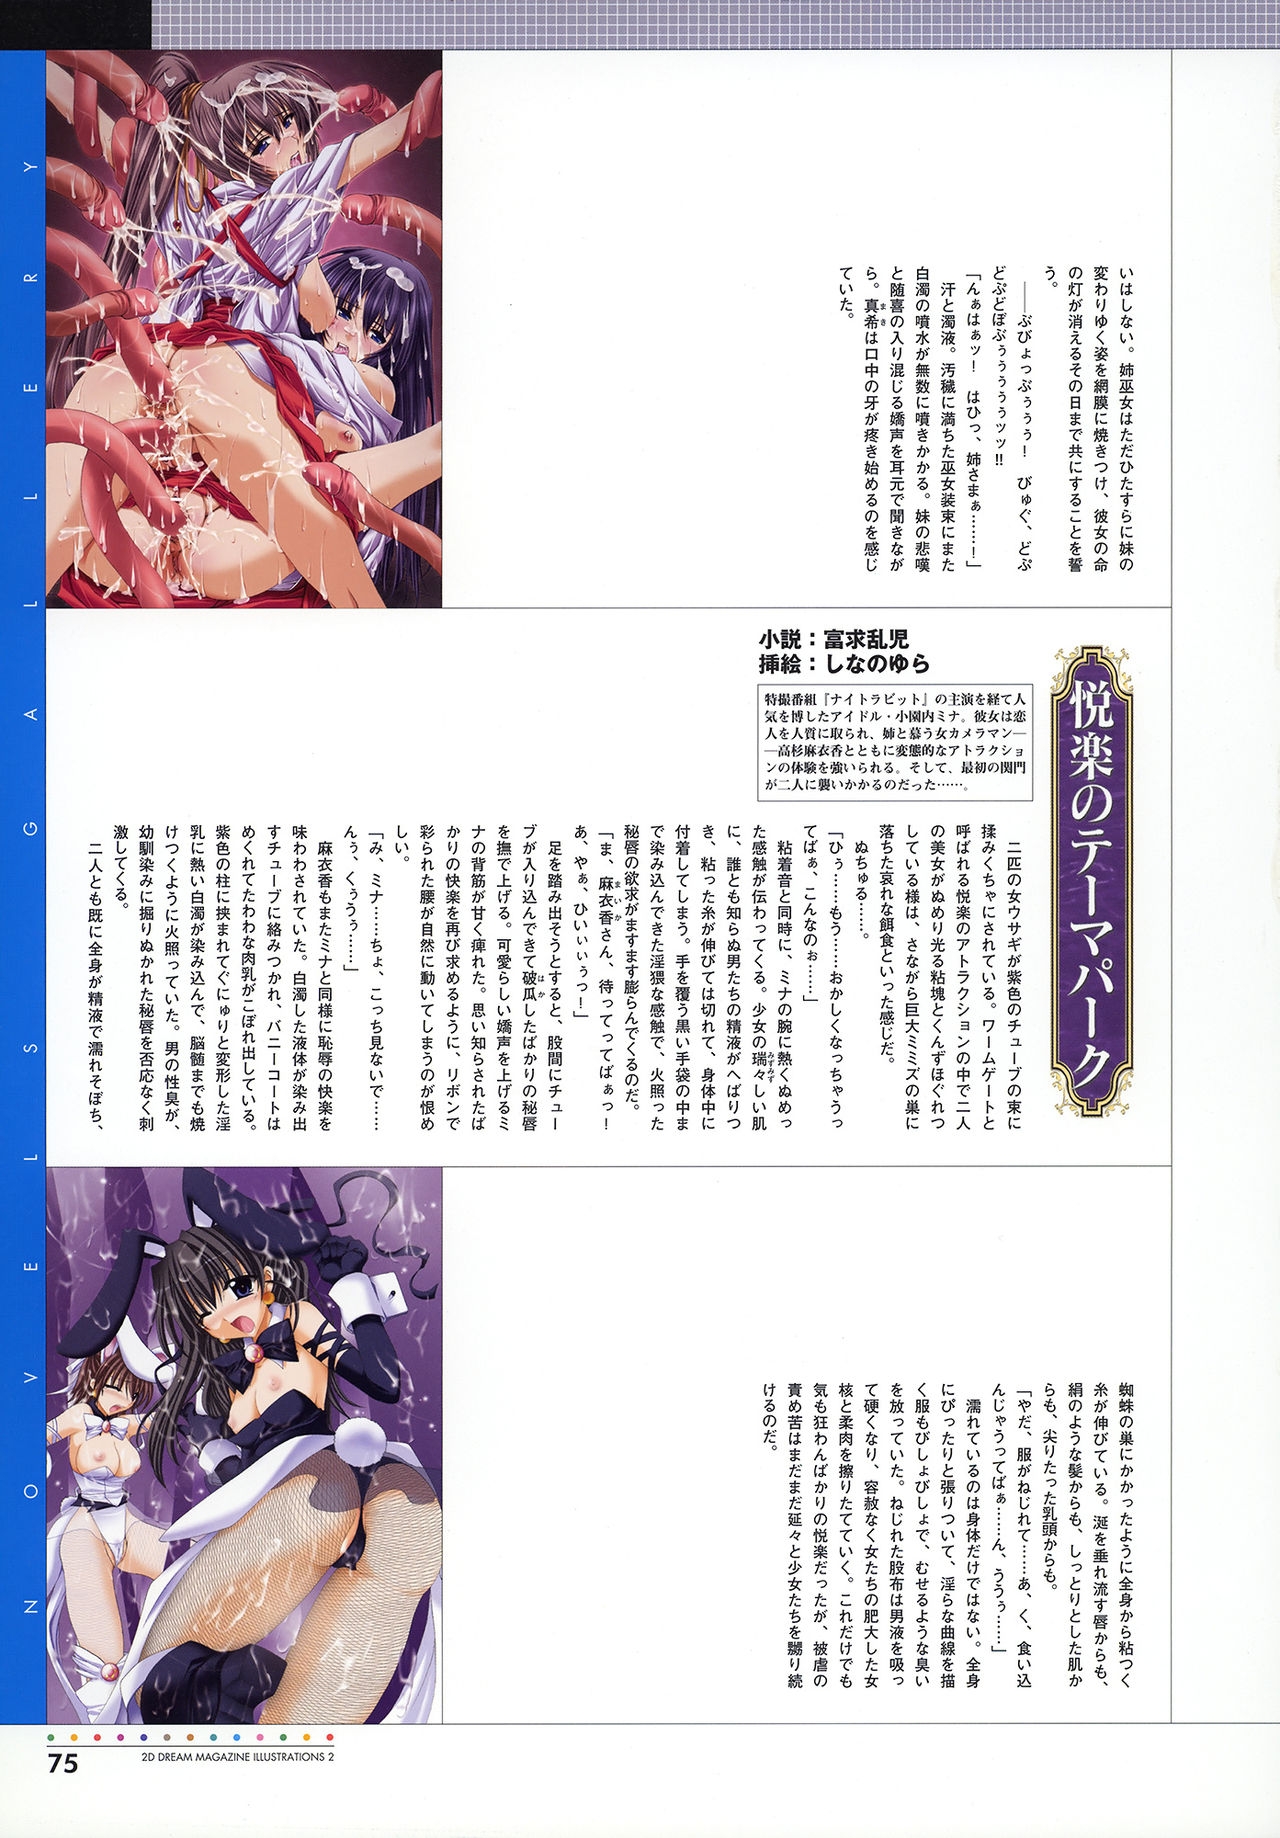 [Illustrations] Nijigen Dream Magazine Illustrations #2 76